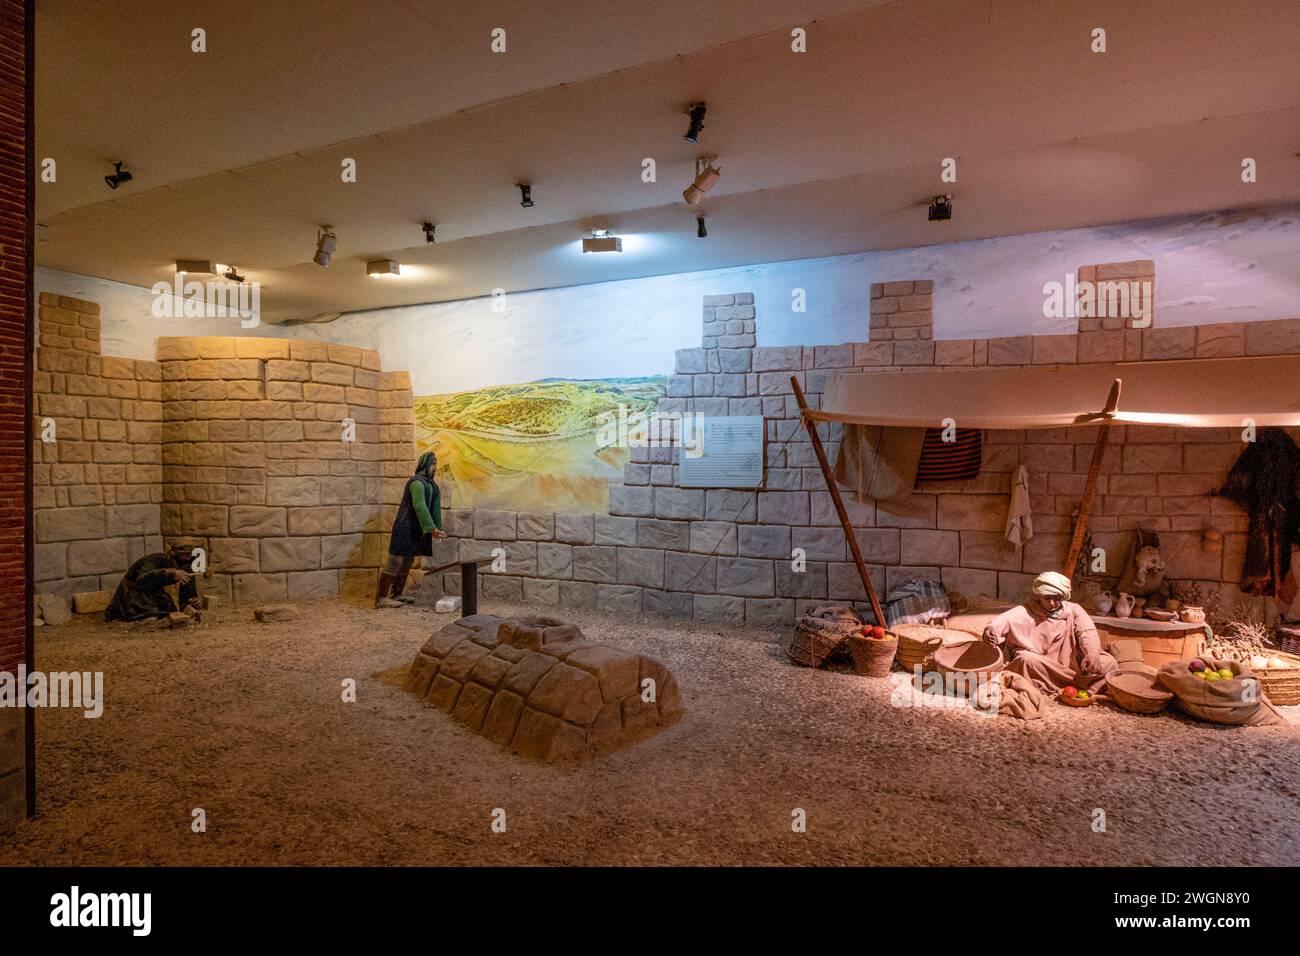 recreation of the Arab village, Aula archaeologica, Medinaceli, Soria, autonomous community of Castilla y León, Spain, Europe Stock Photo